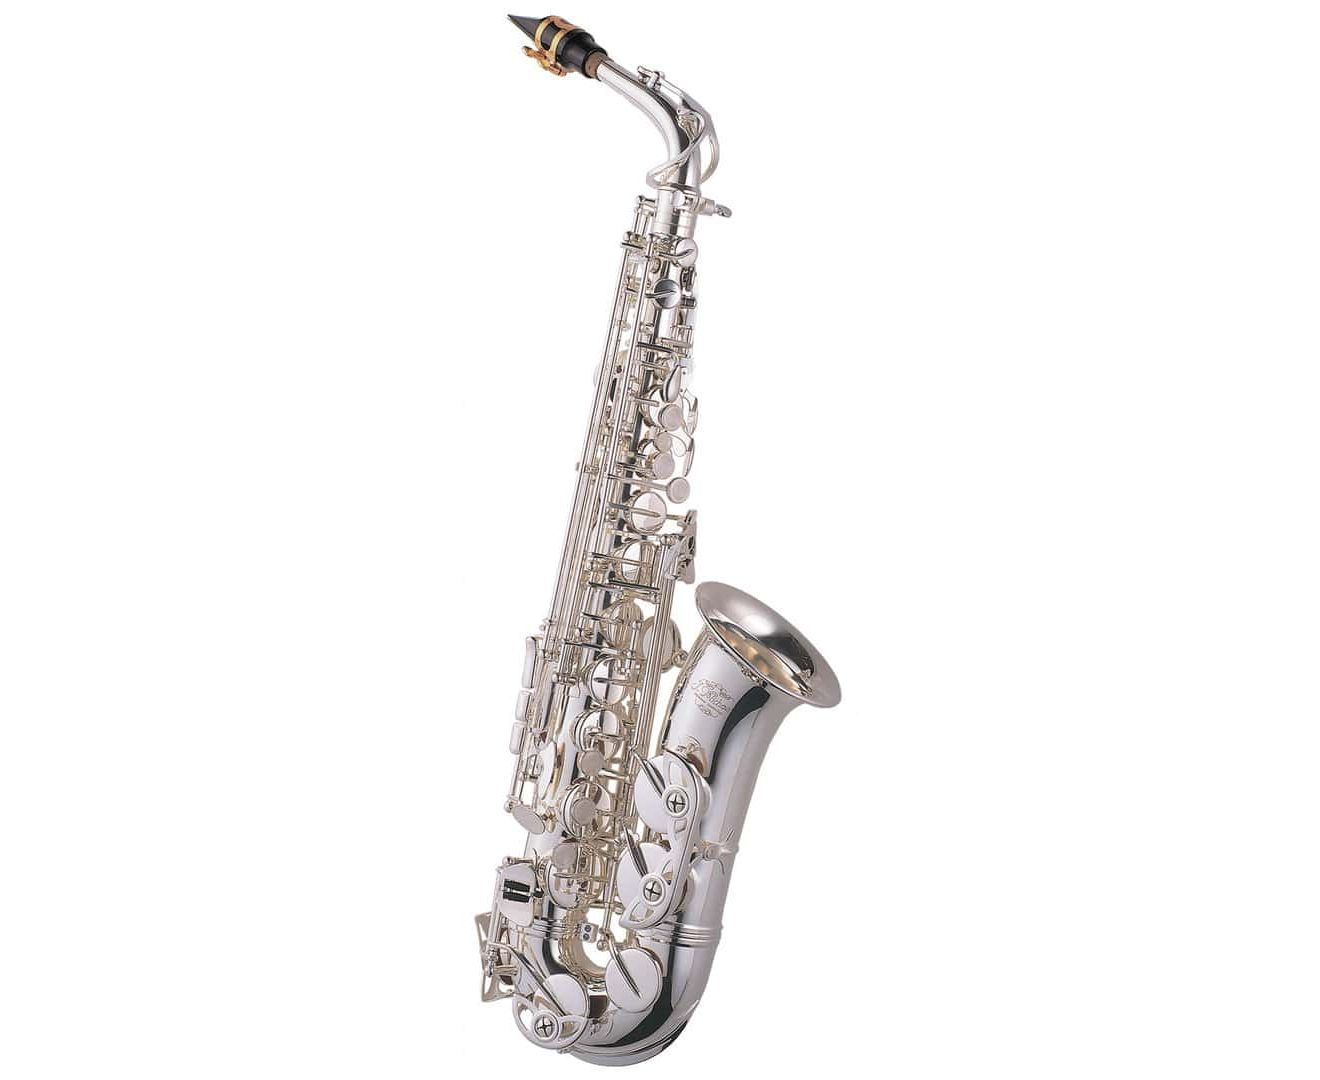 Нова саксофон. J. Michael th-650 - тенор. Ля бемонь на Аль саксофоне.